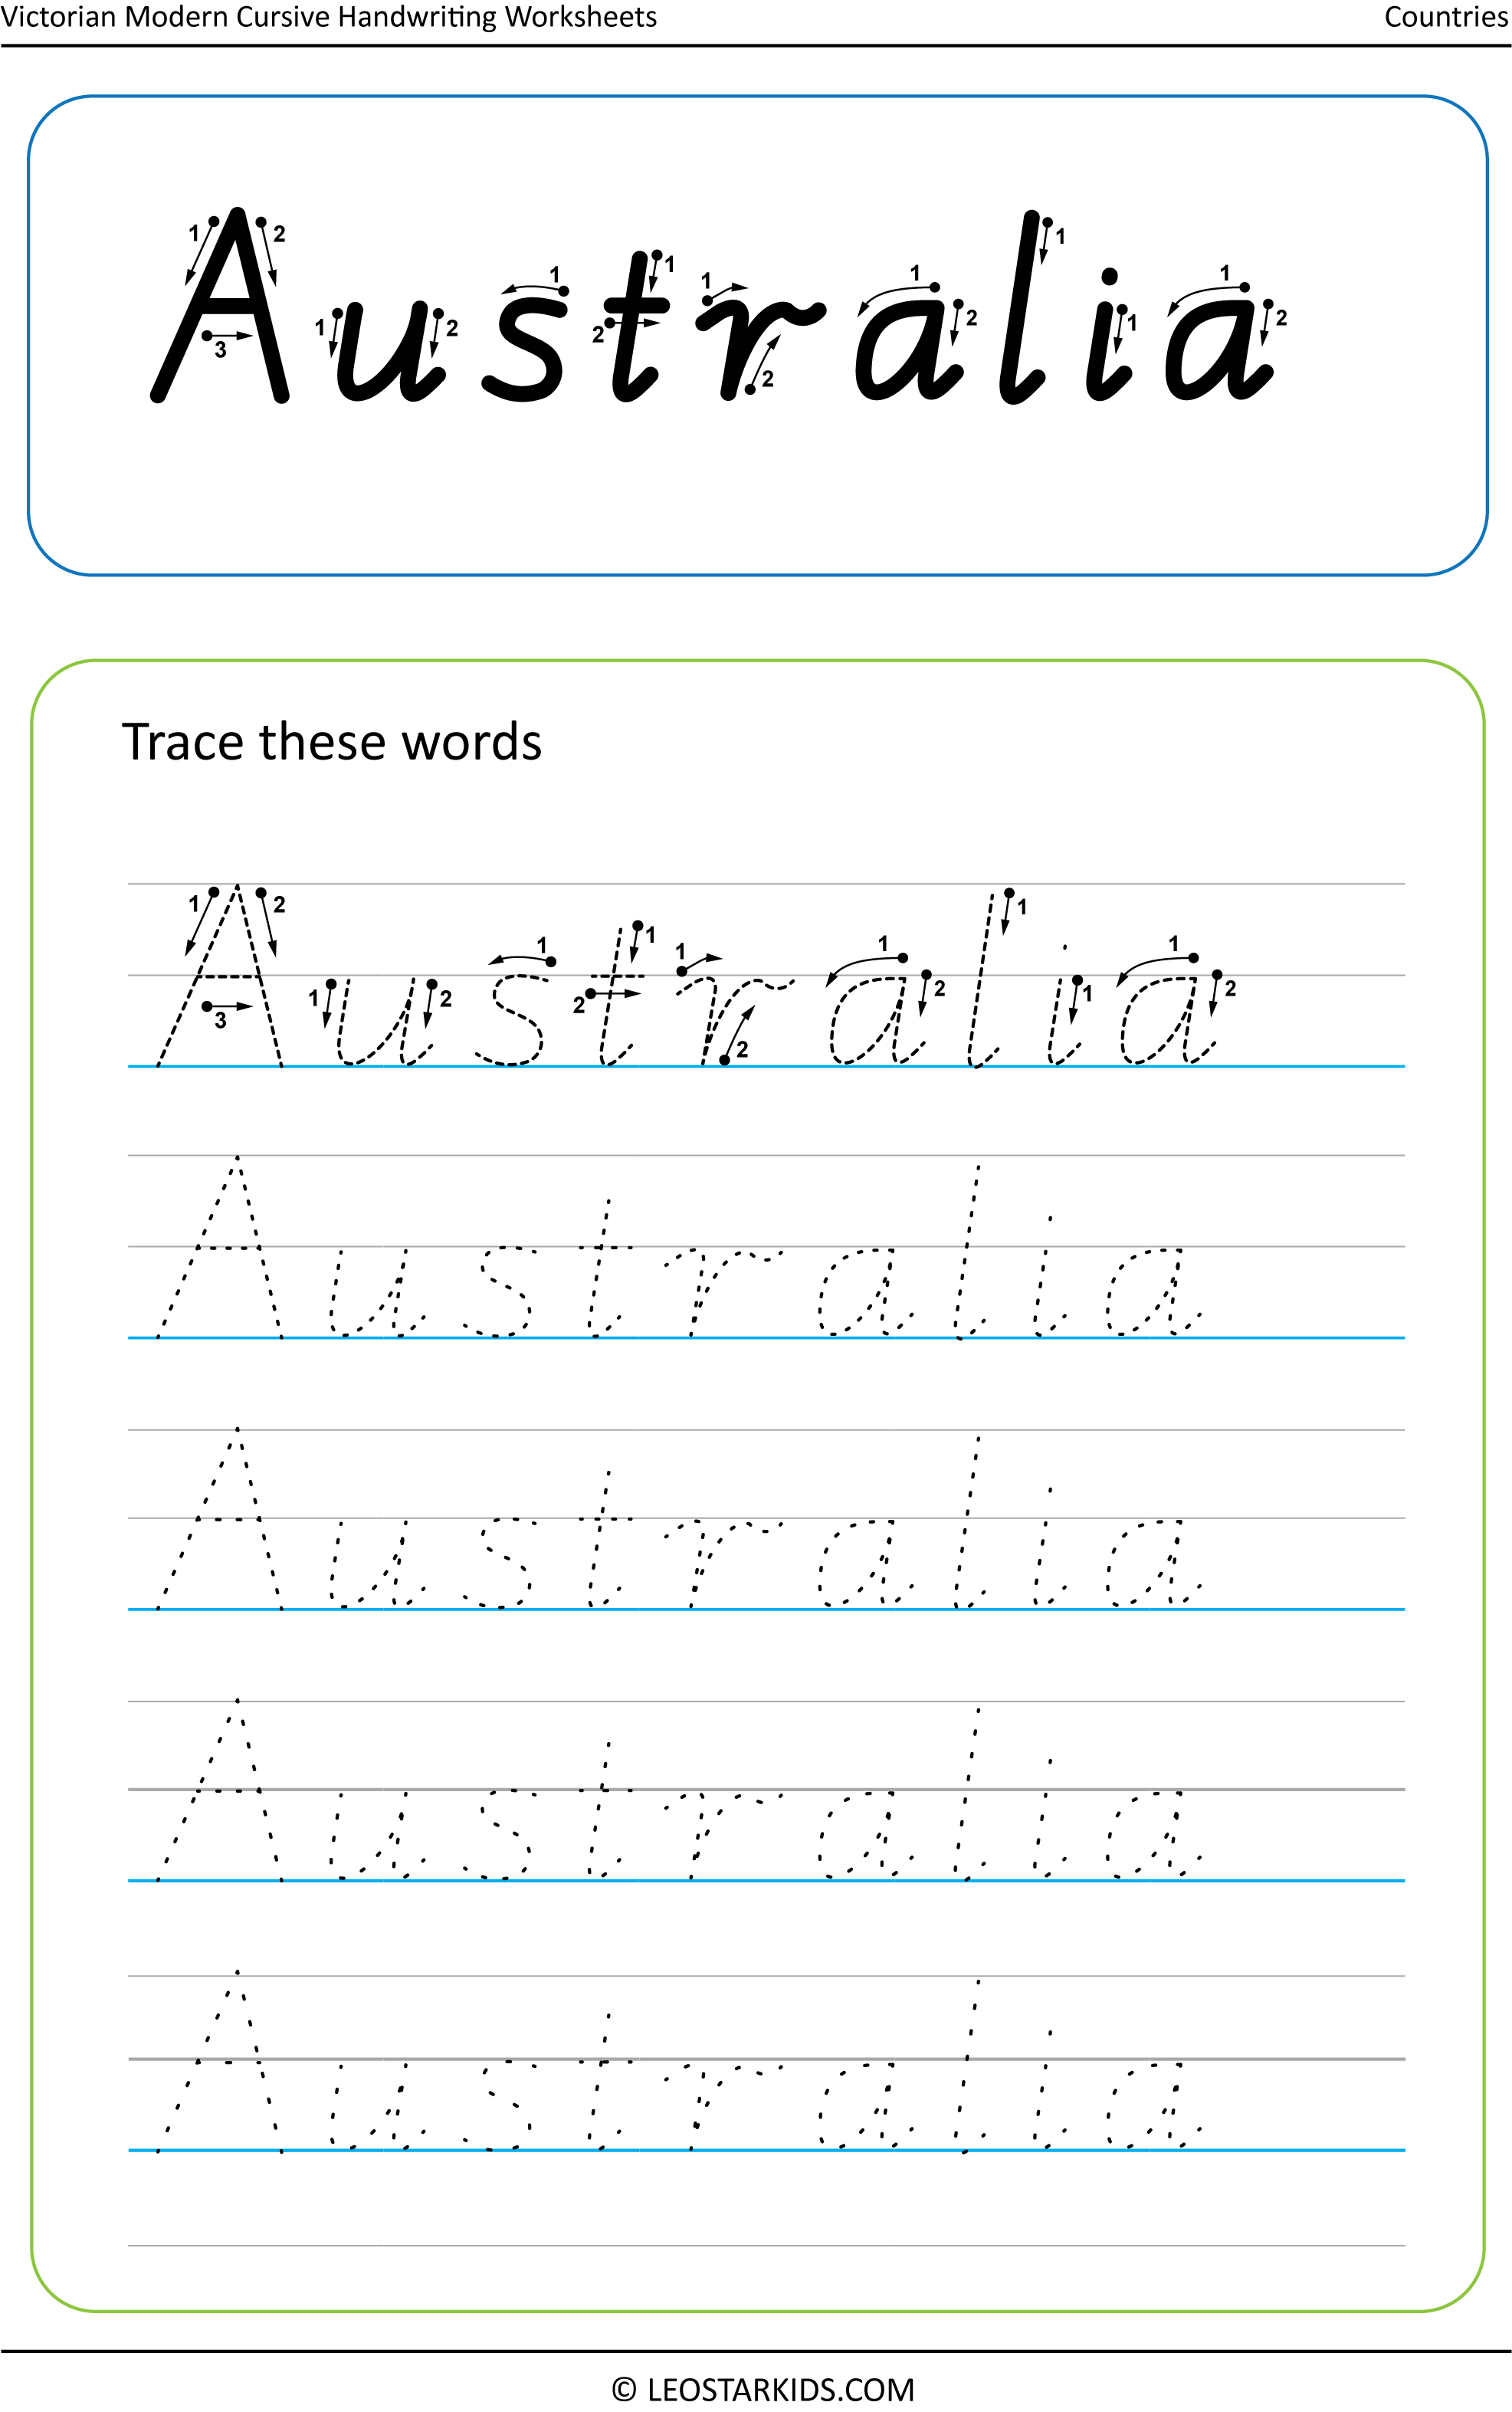 Australian Handwriting Worksheets Victorian Modern Cursive 